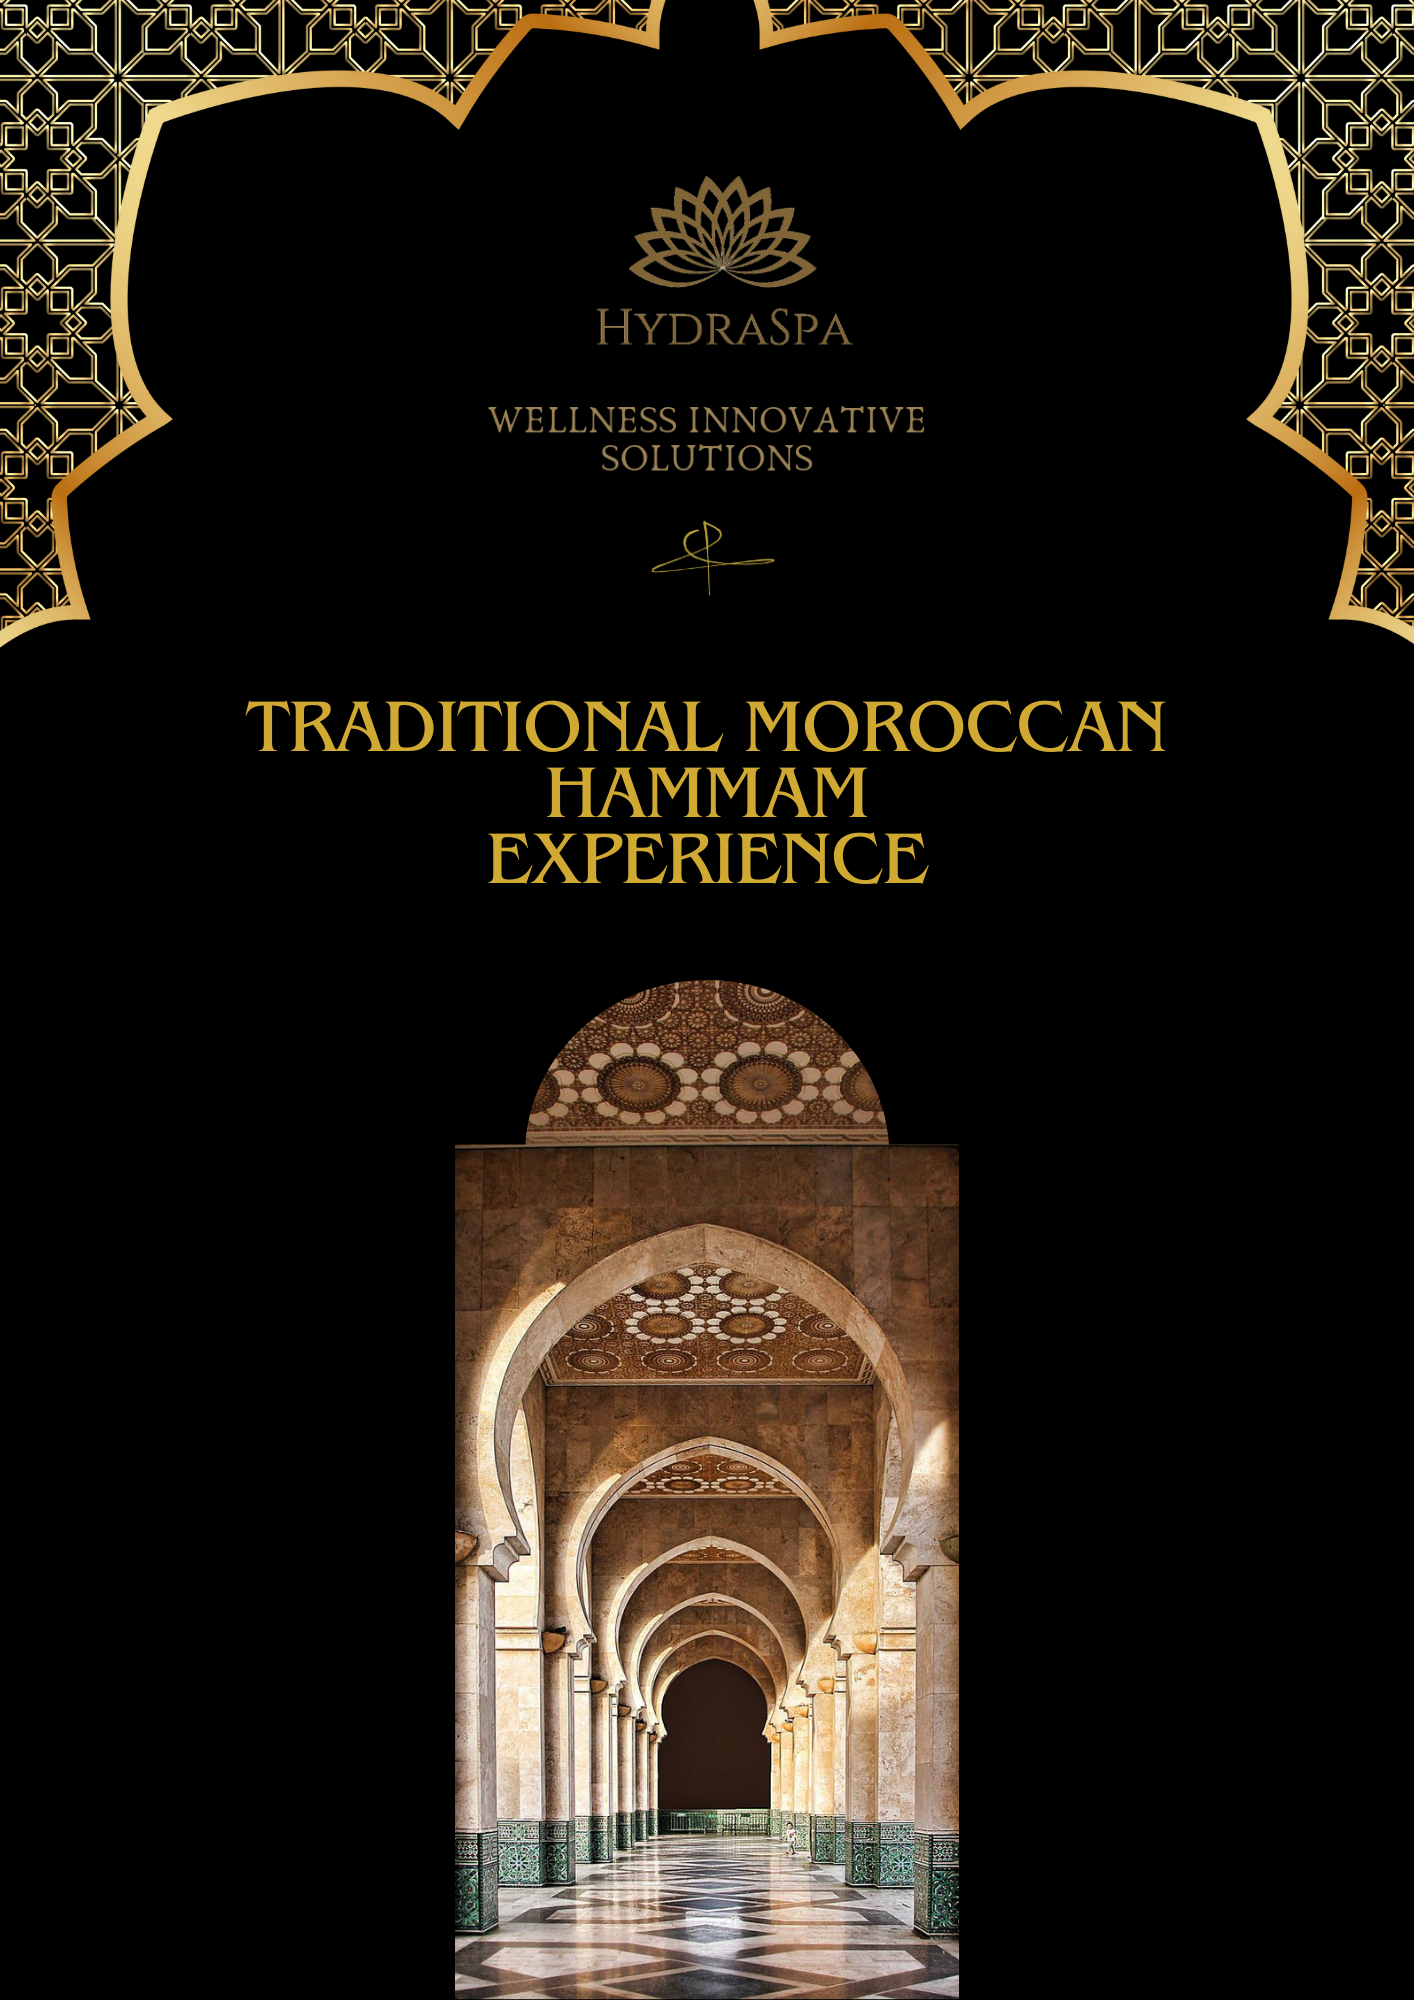 Moroccan Hammam Ritual Experience image 1